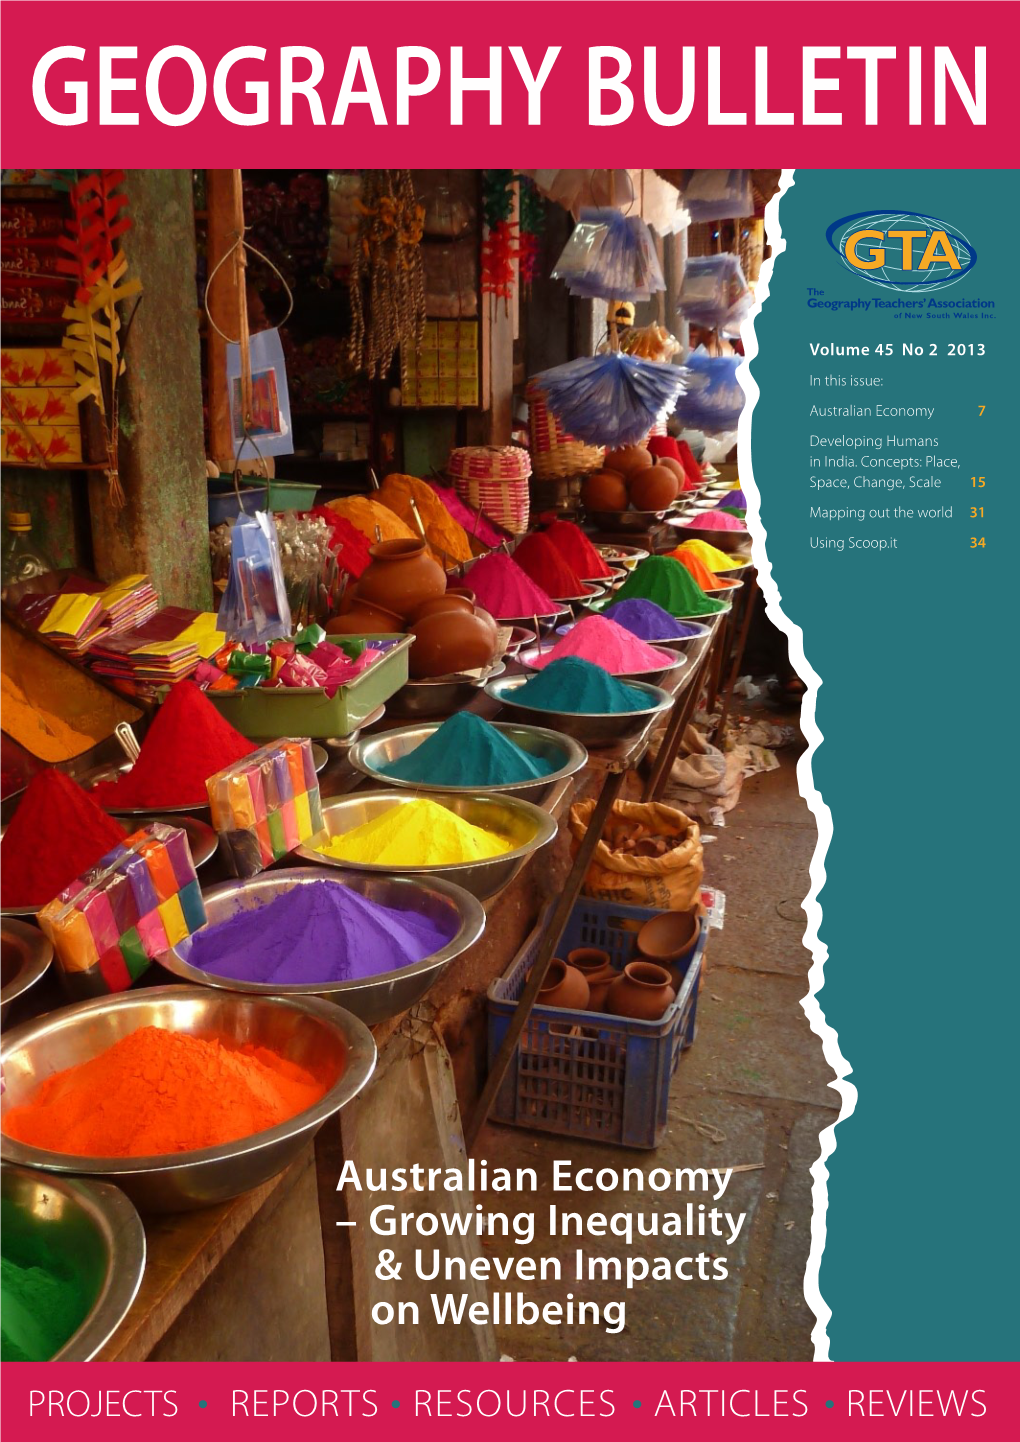 Australian Economy 7 Developing Humans in India